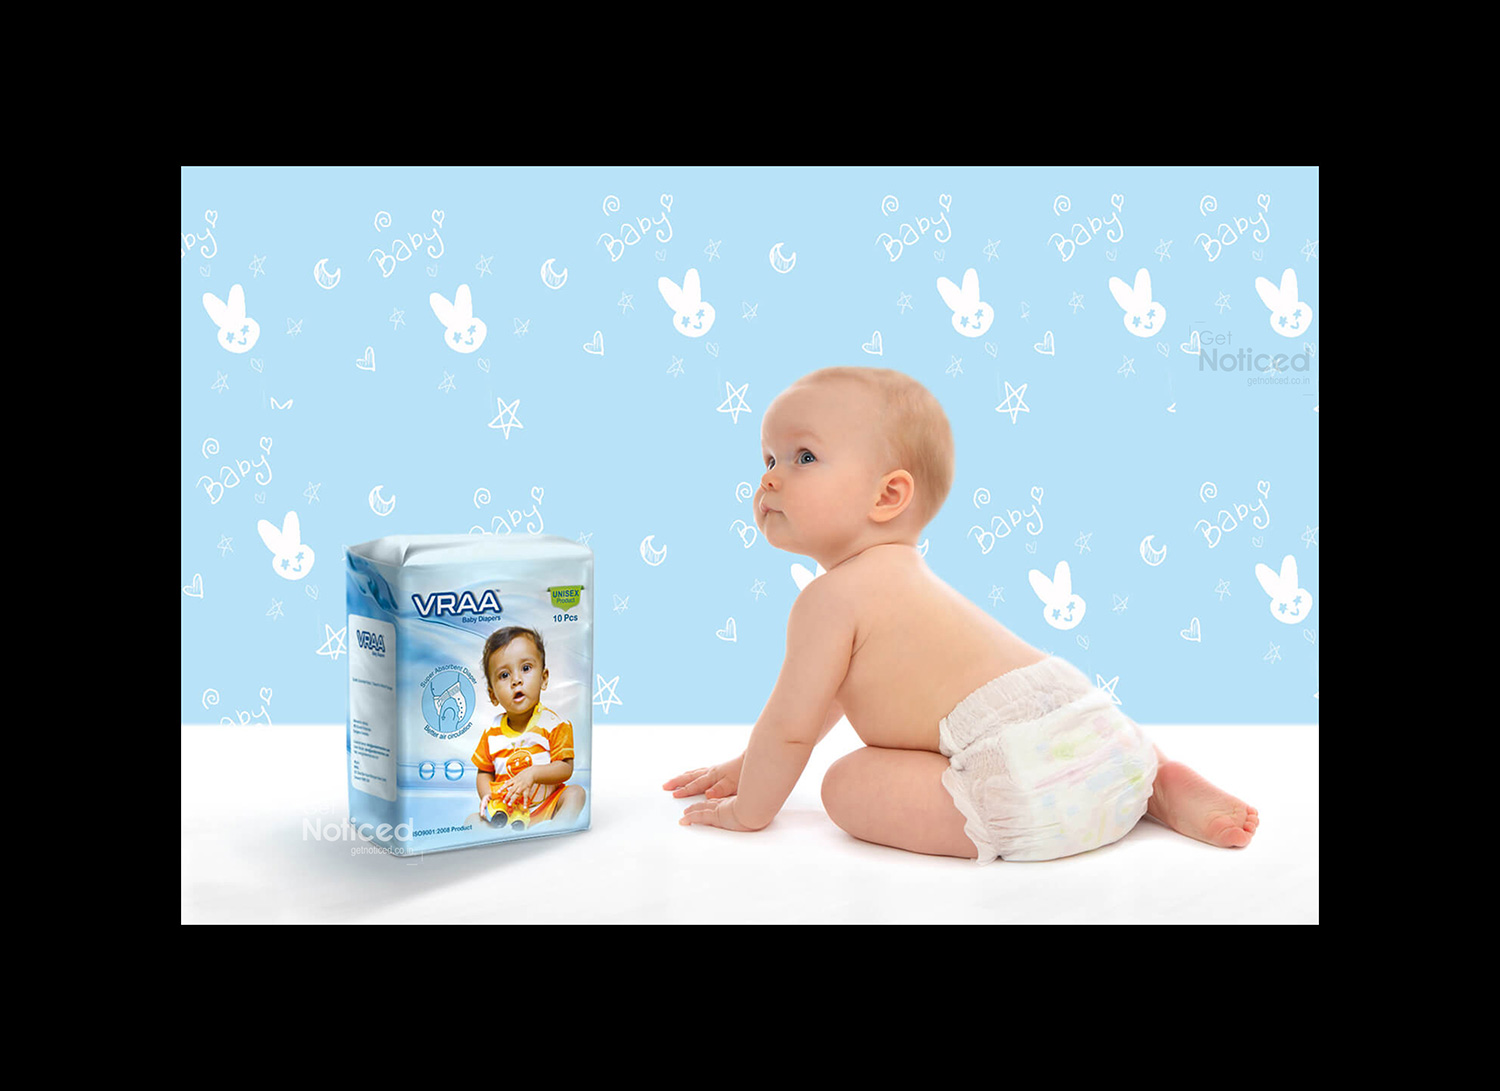 Vraa Baby Diapers Packaging Design